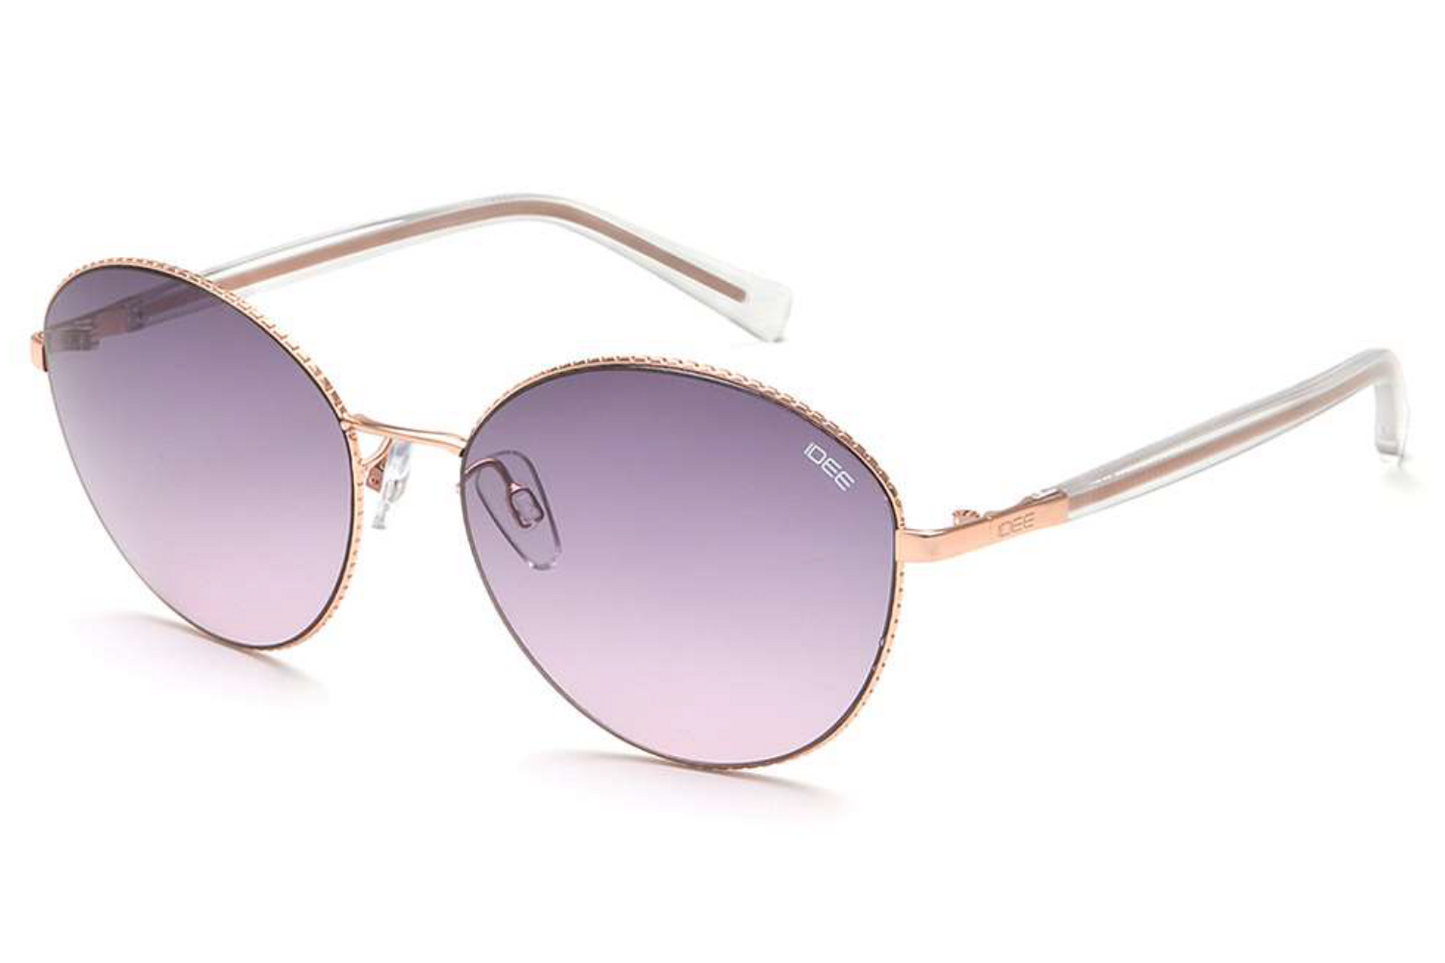 IDEE Sunglasses S2909